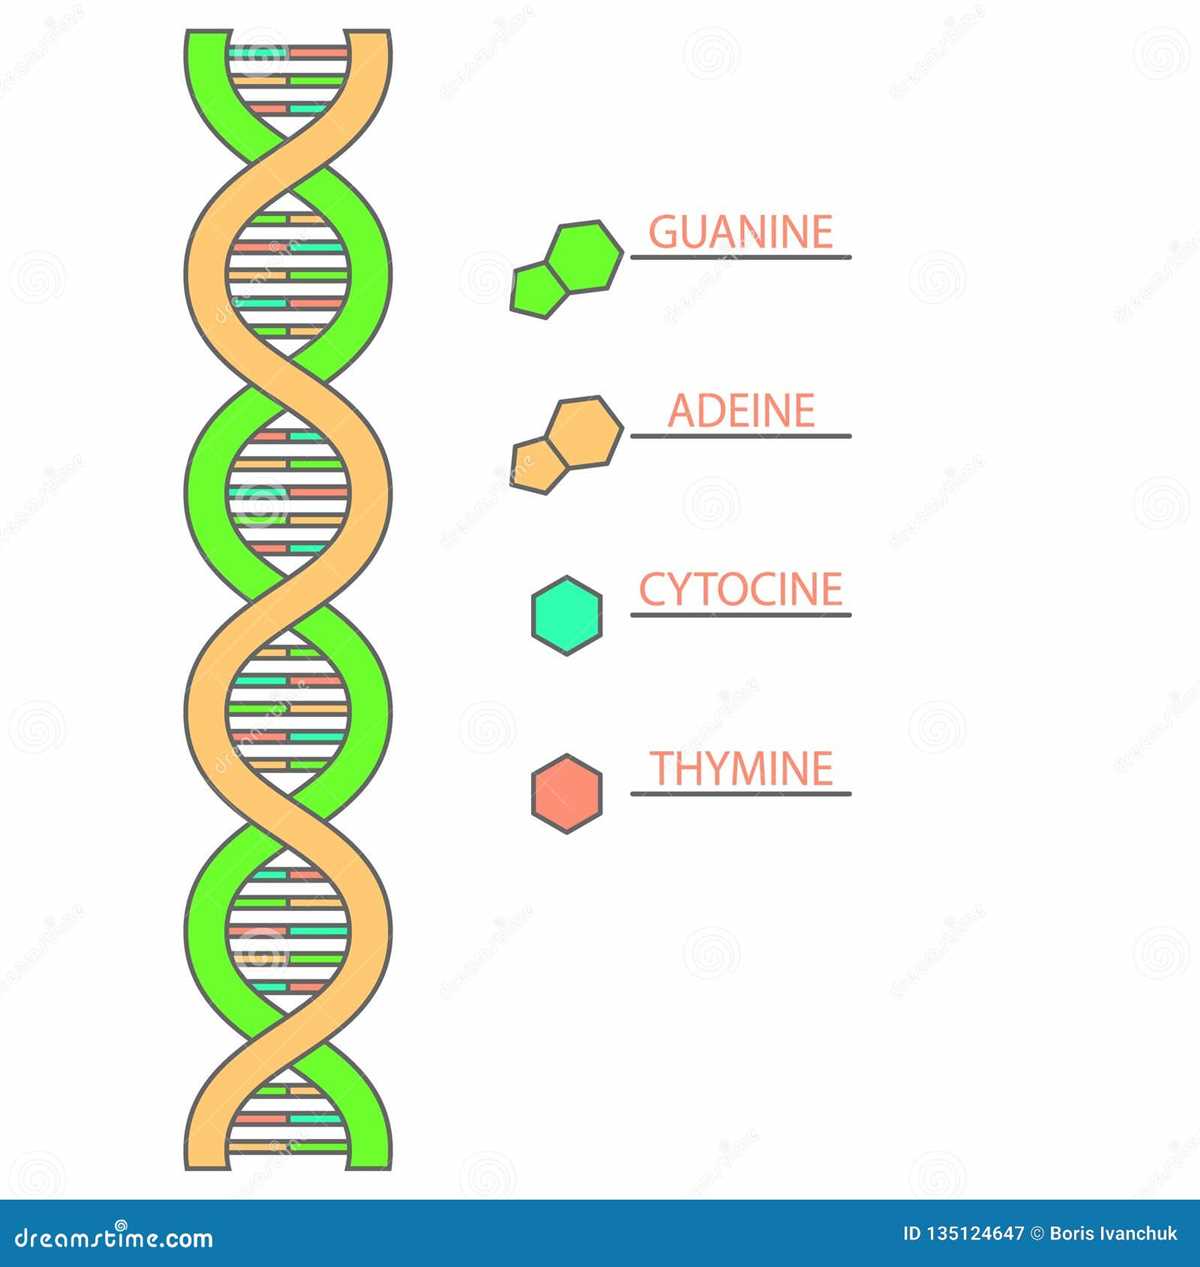 DNA Simple Diagram: Understanding the Basics